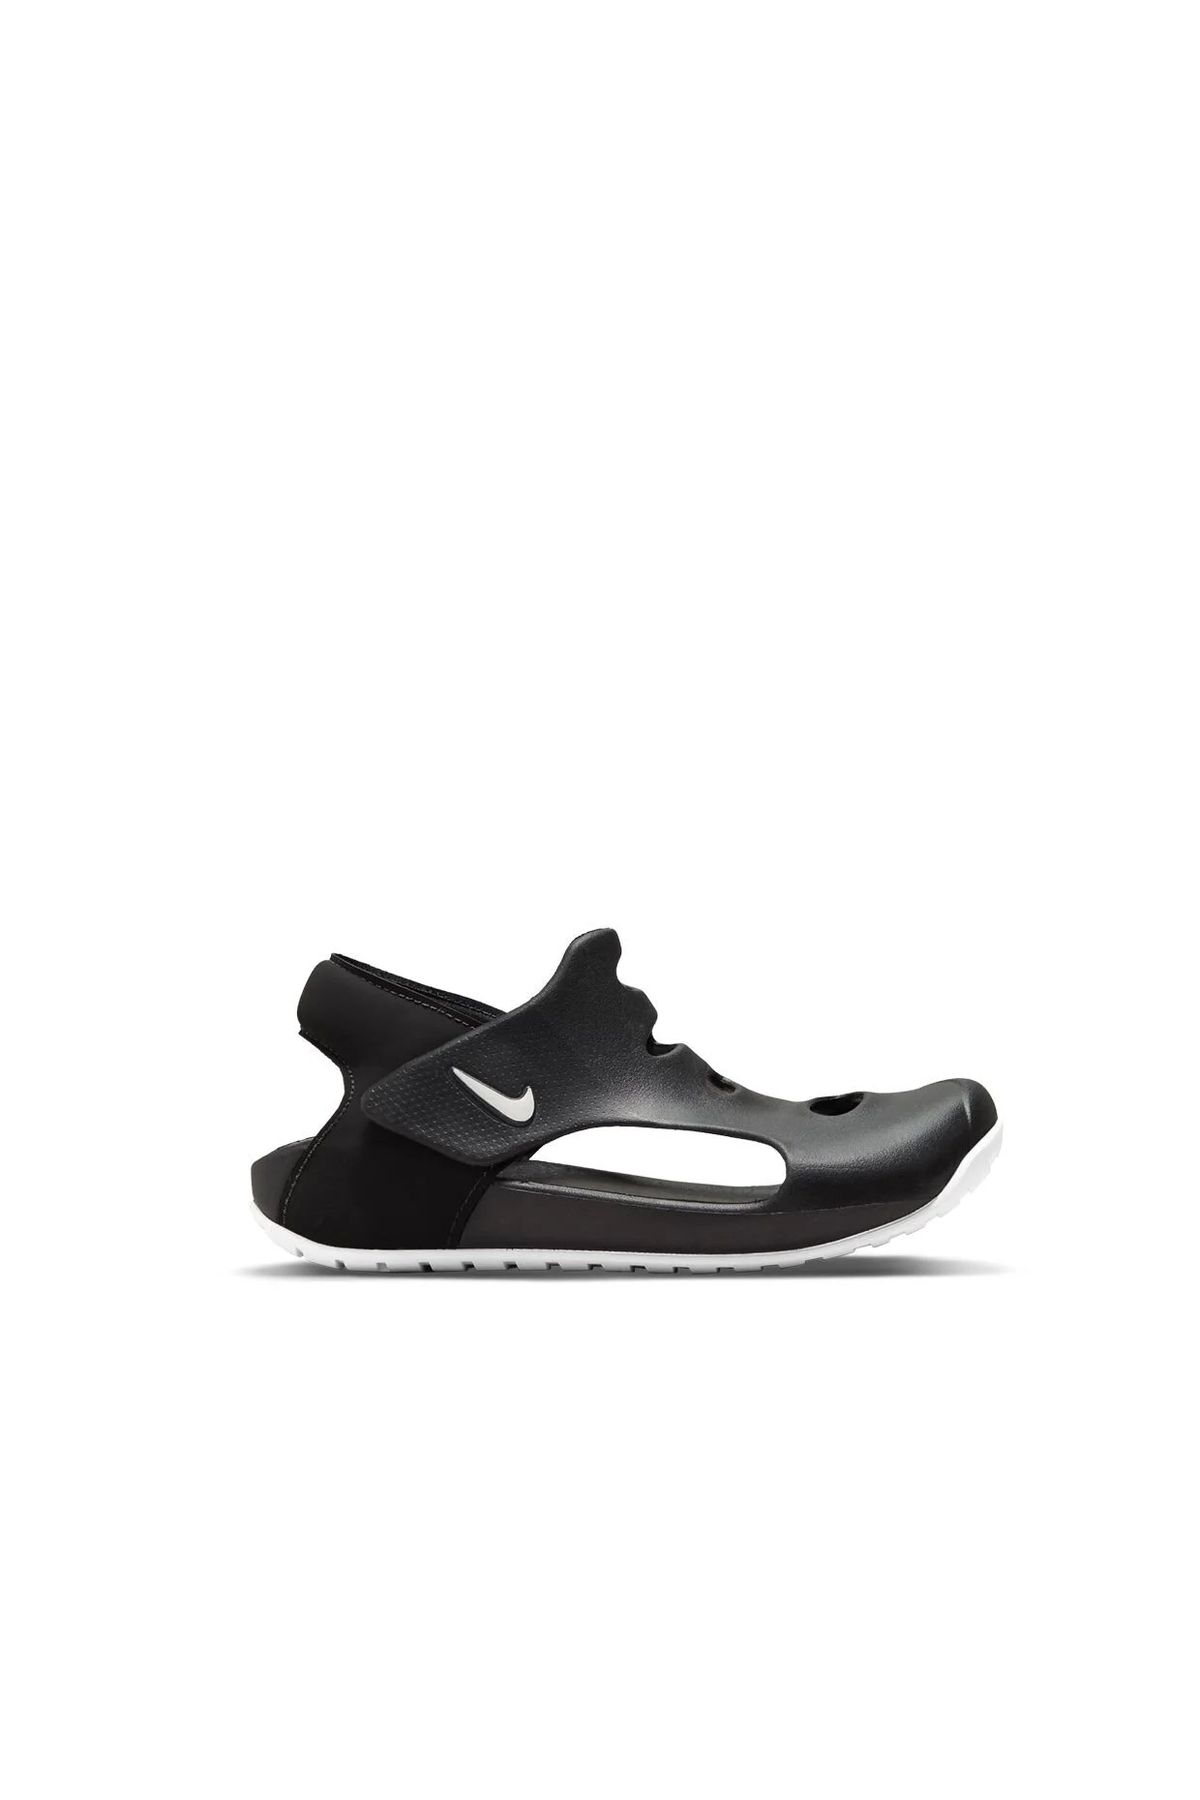 Nike Sunray Protect 3 Unısex Çocuk Sandalet Dh9462-001